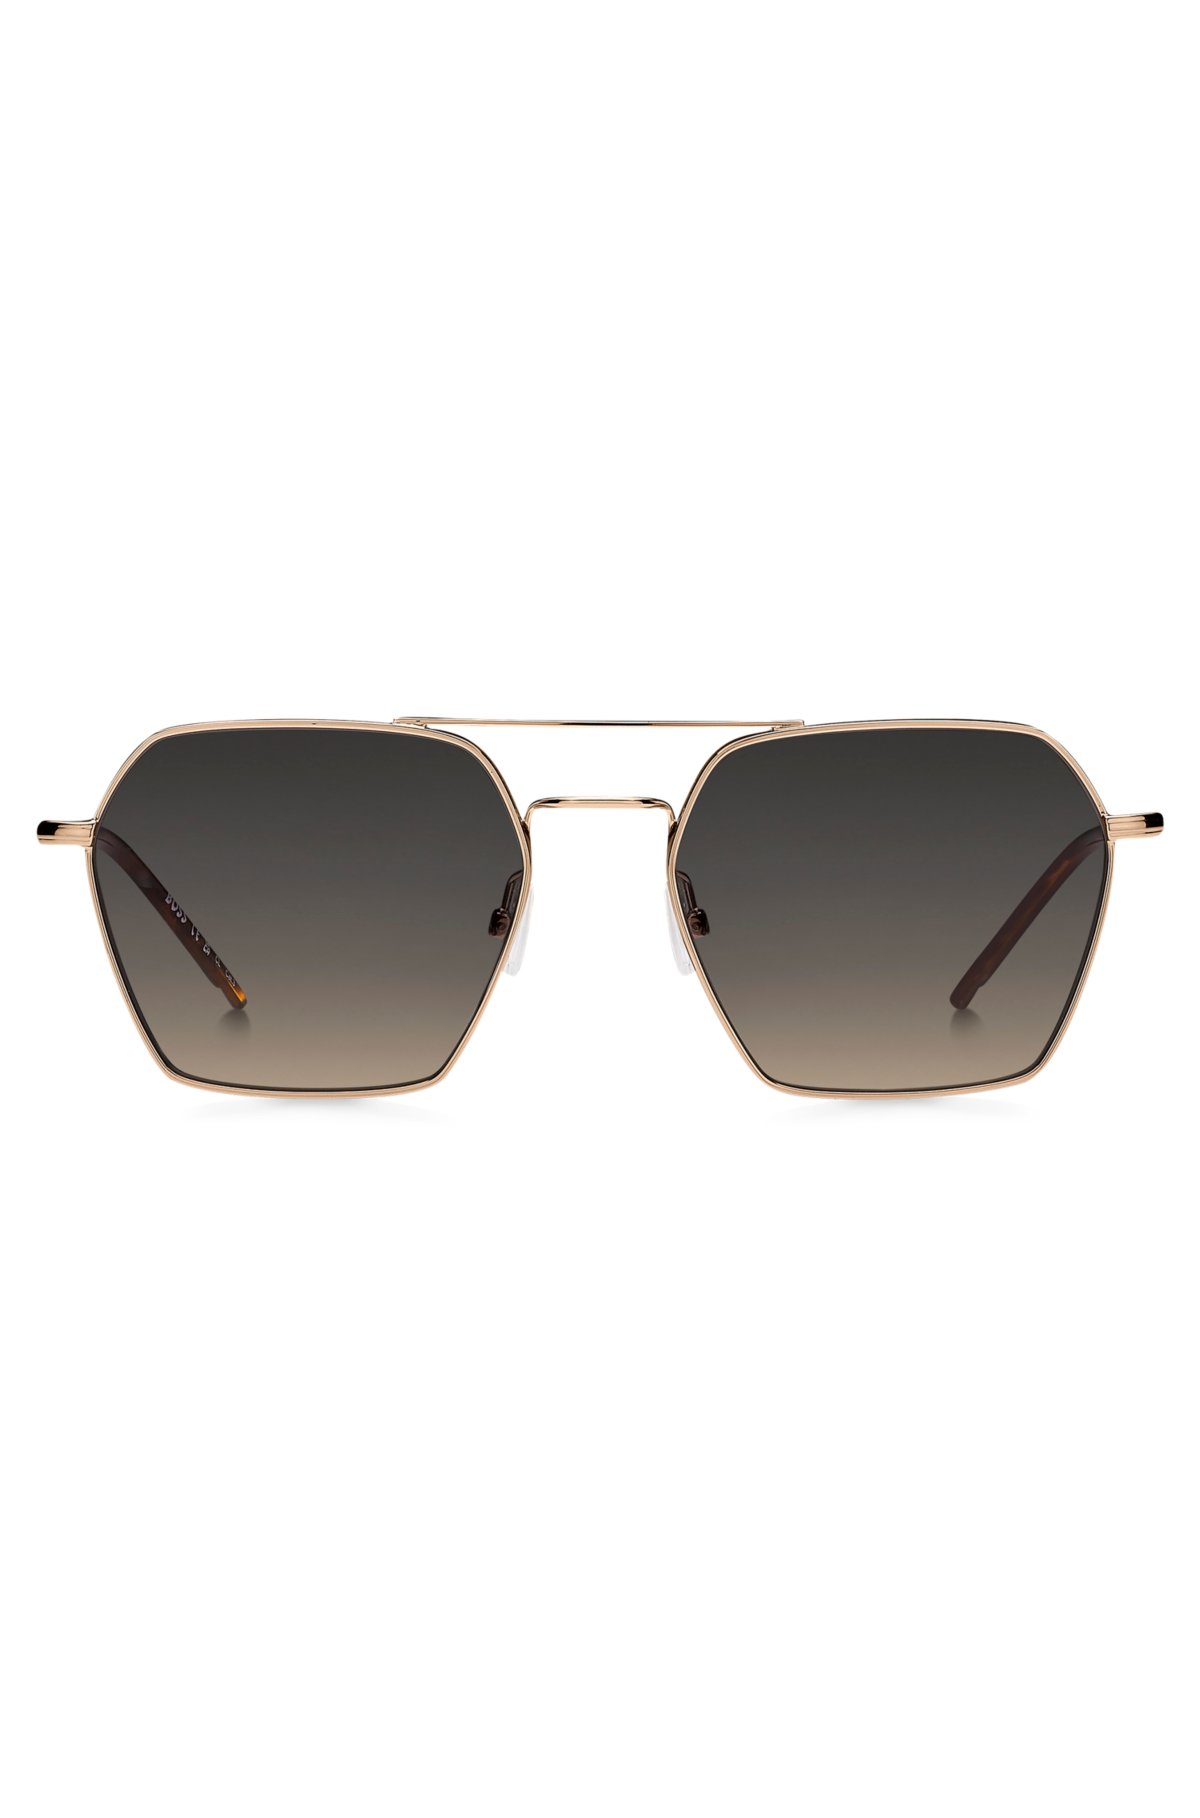 Steel sunglasses with double bridge, Gold